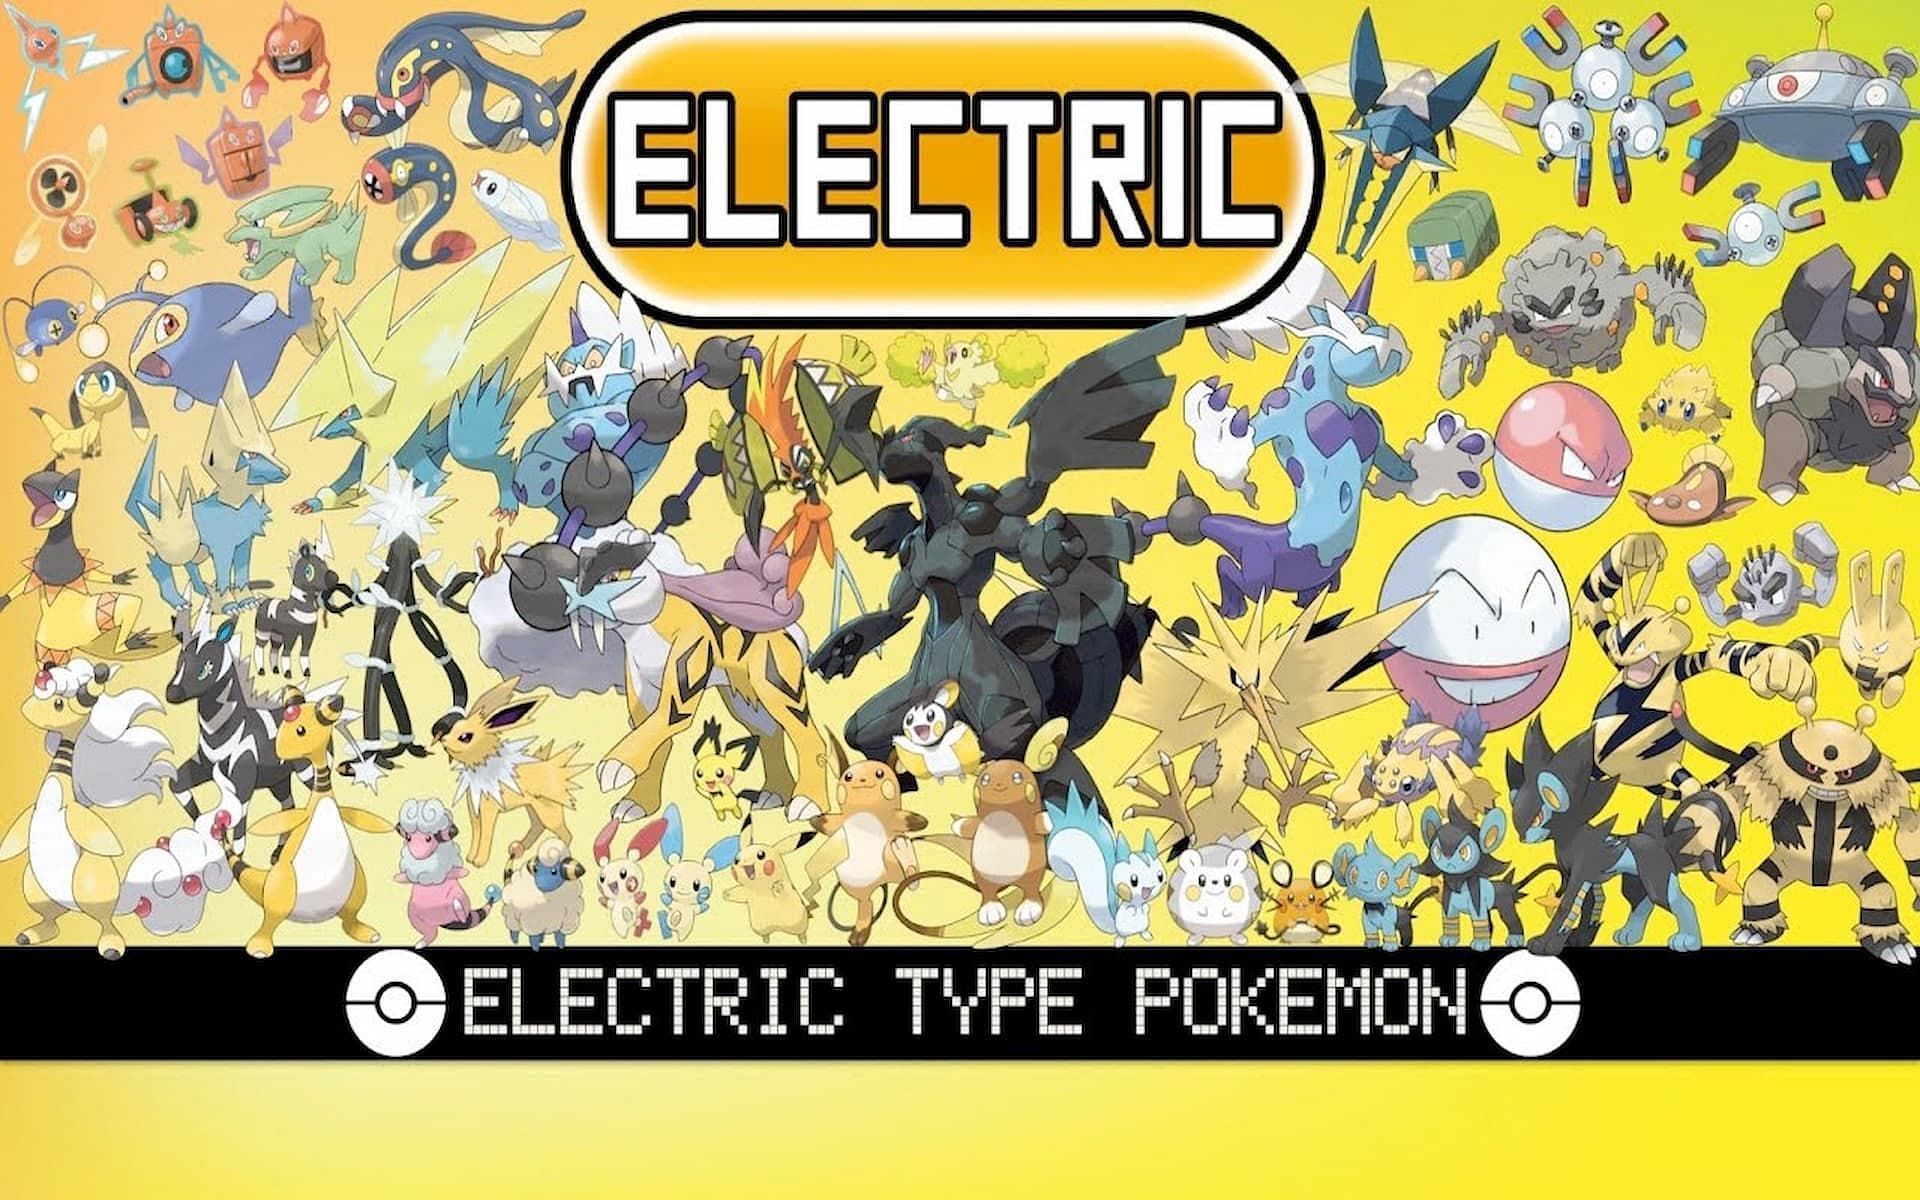 All Electric-type Pokemon. (Image via Tom Salazar)